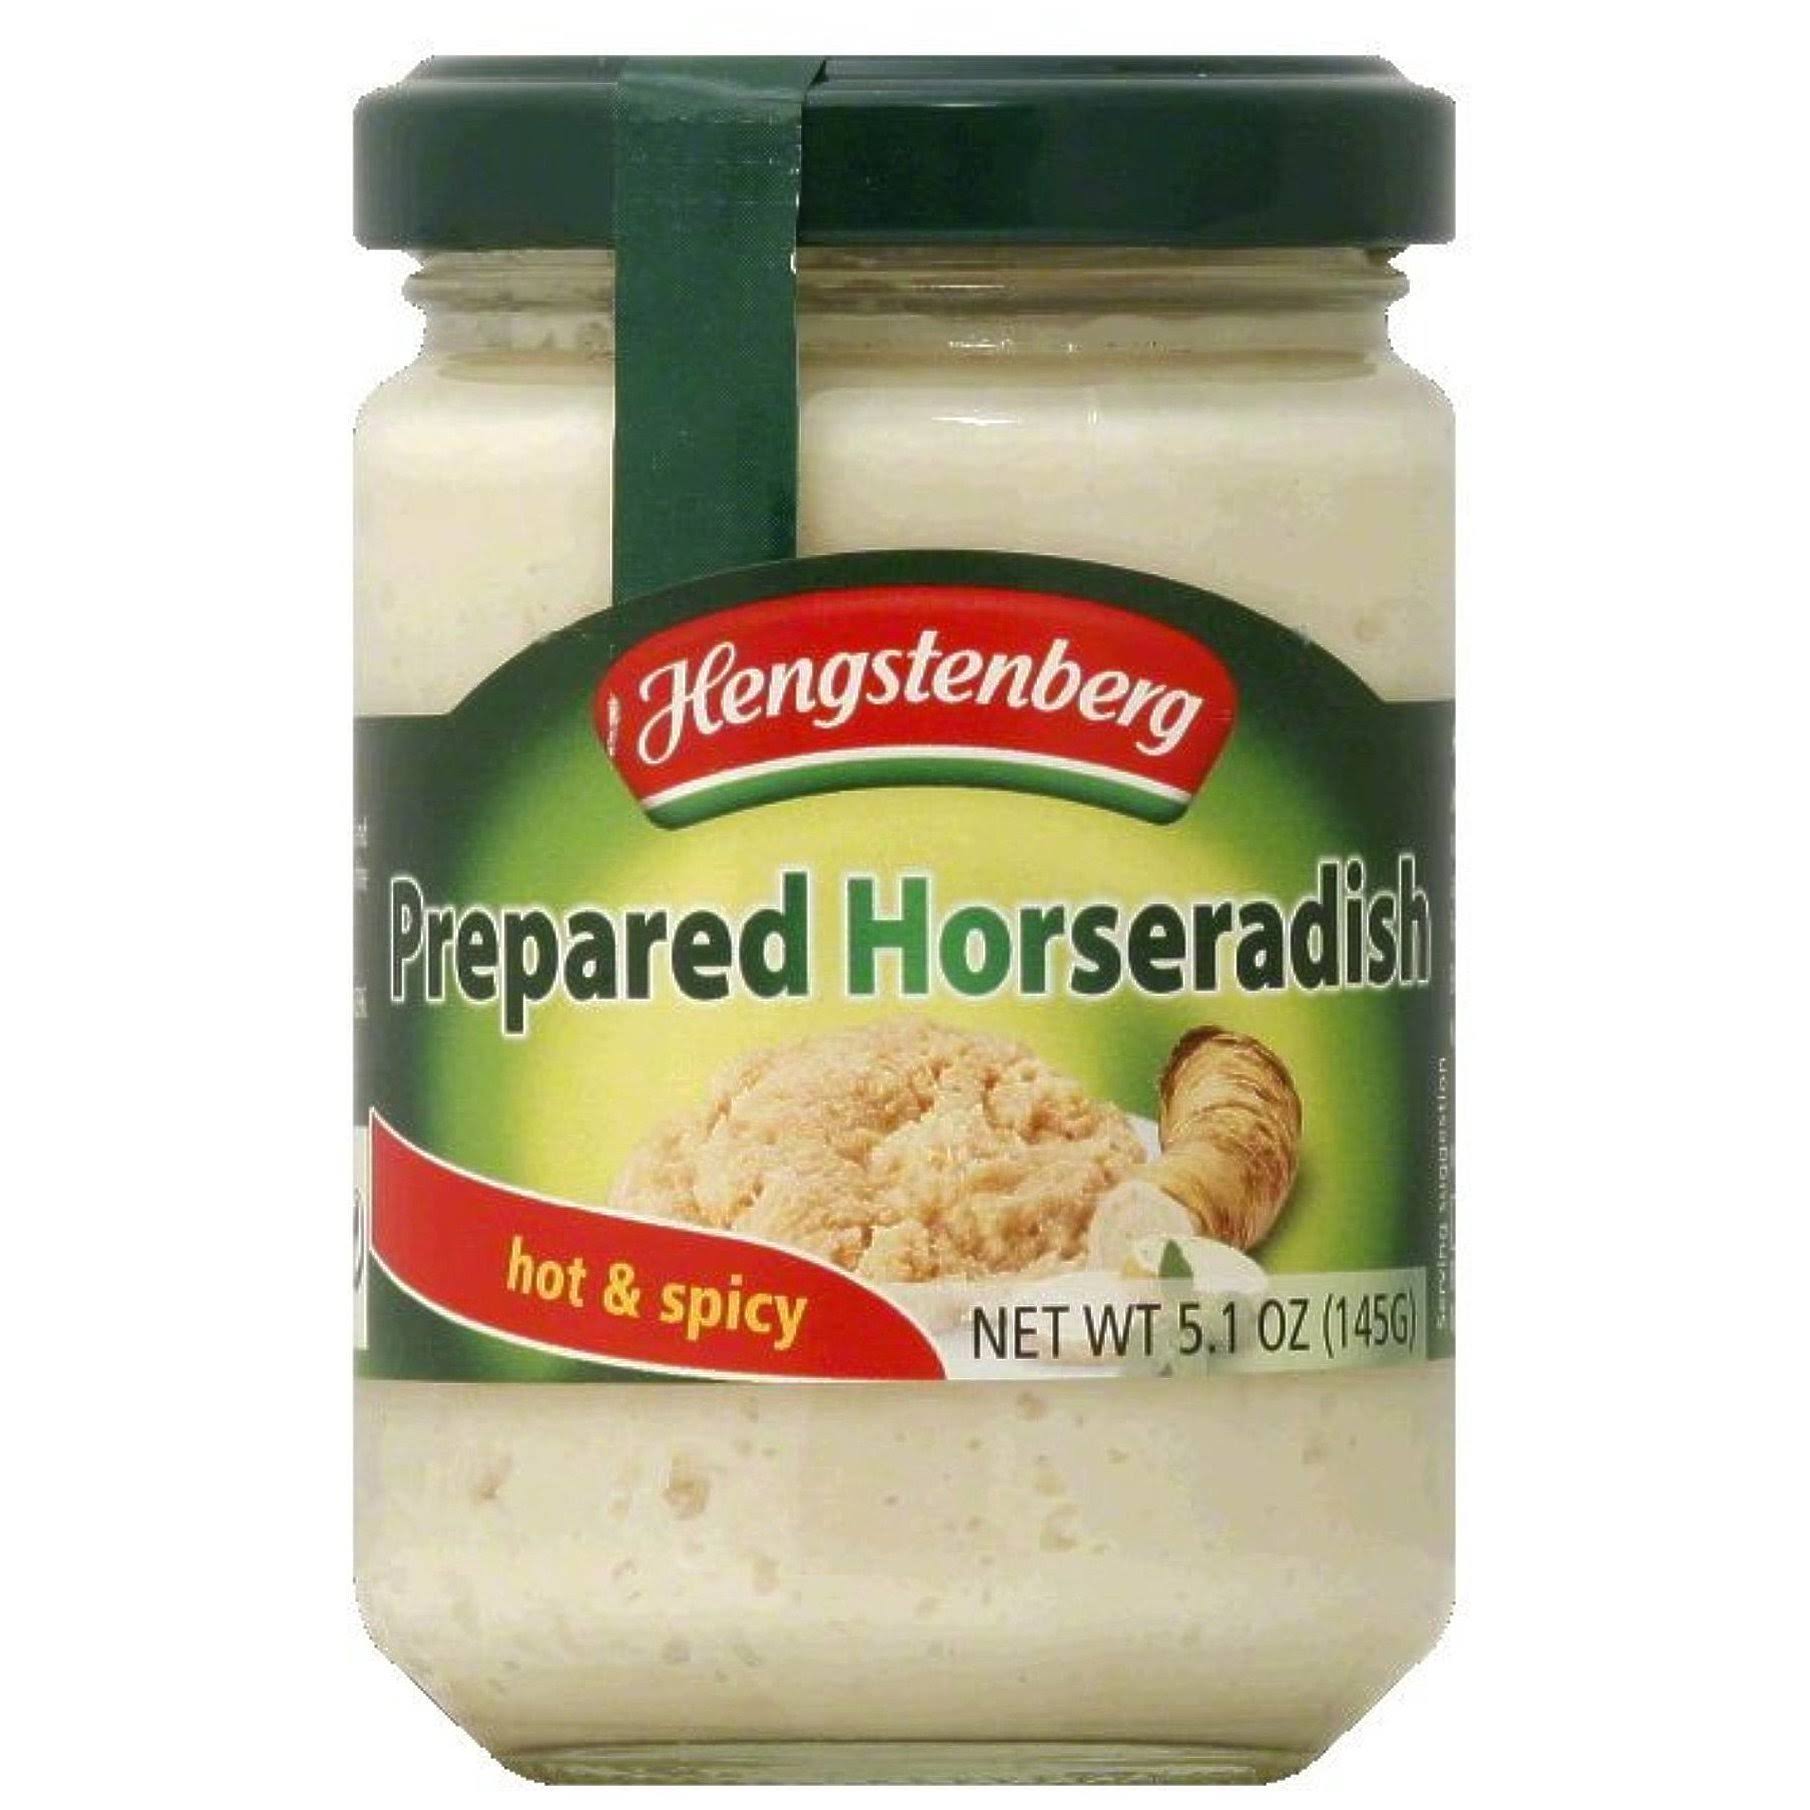 Hengstenberg Prepared Horseradish - Hot and Spicy, 5.1oz